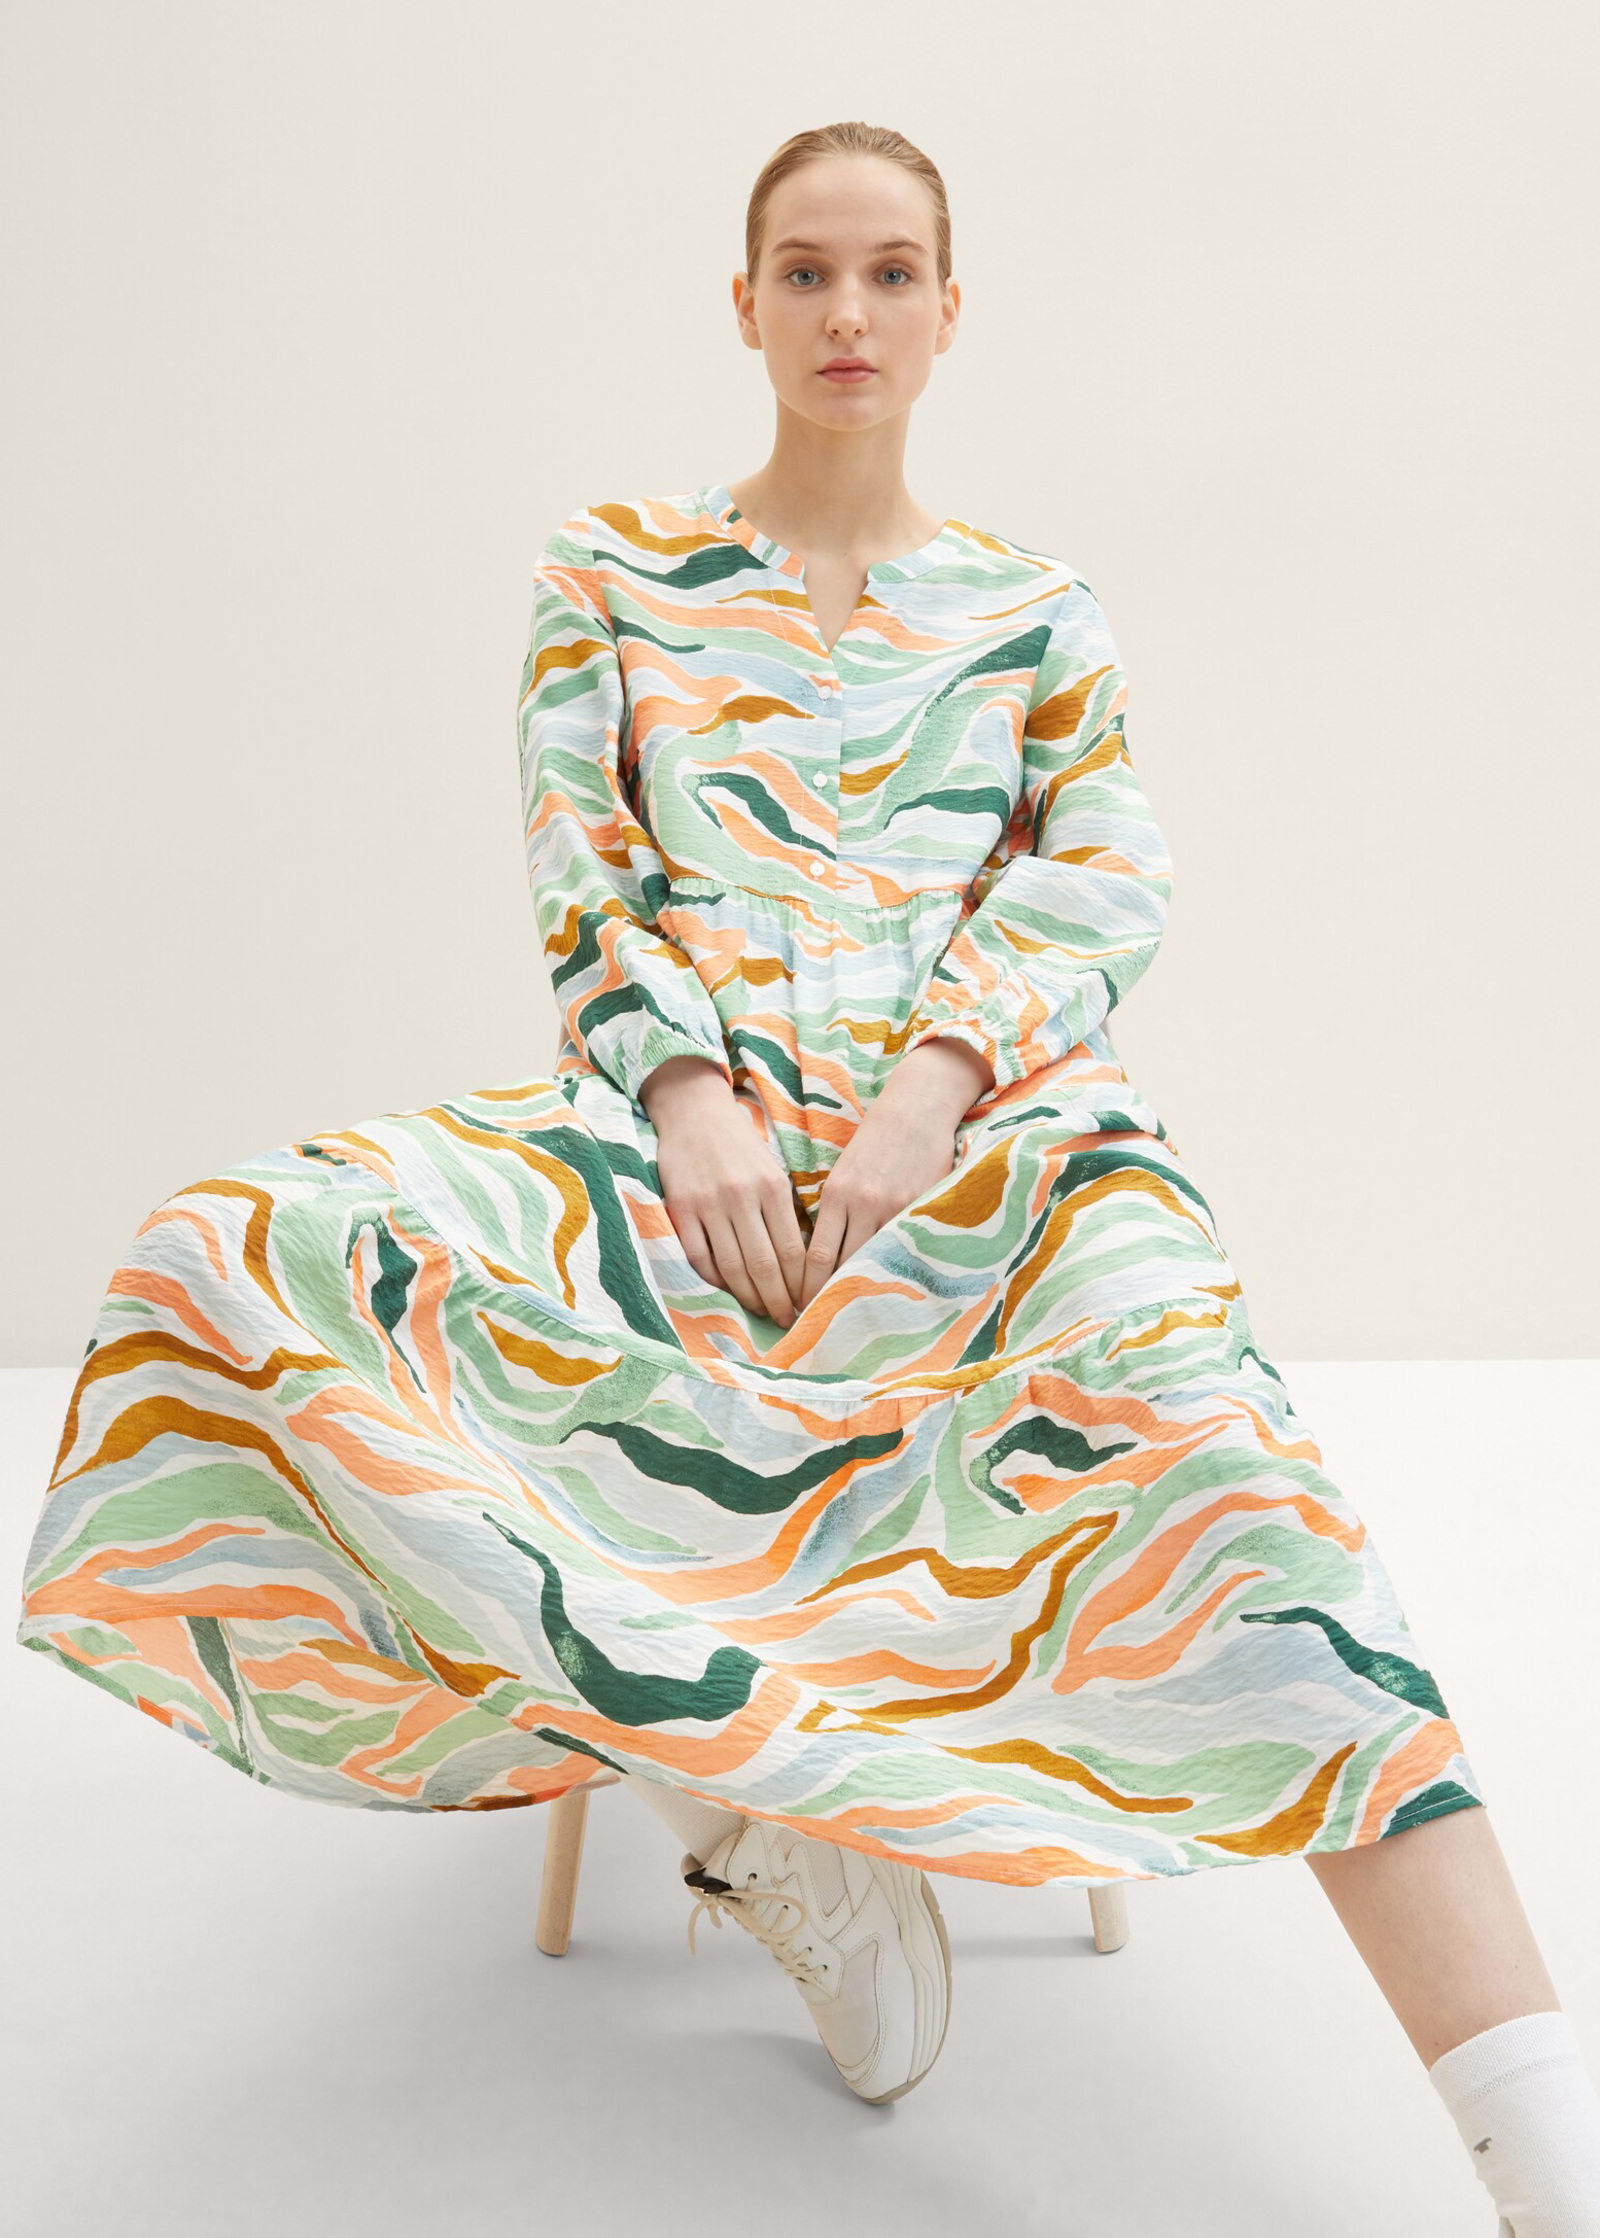 Tom Tailor® Dress - Colorful Wavy Design Size 38